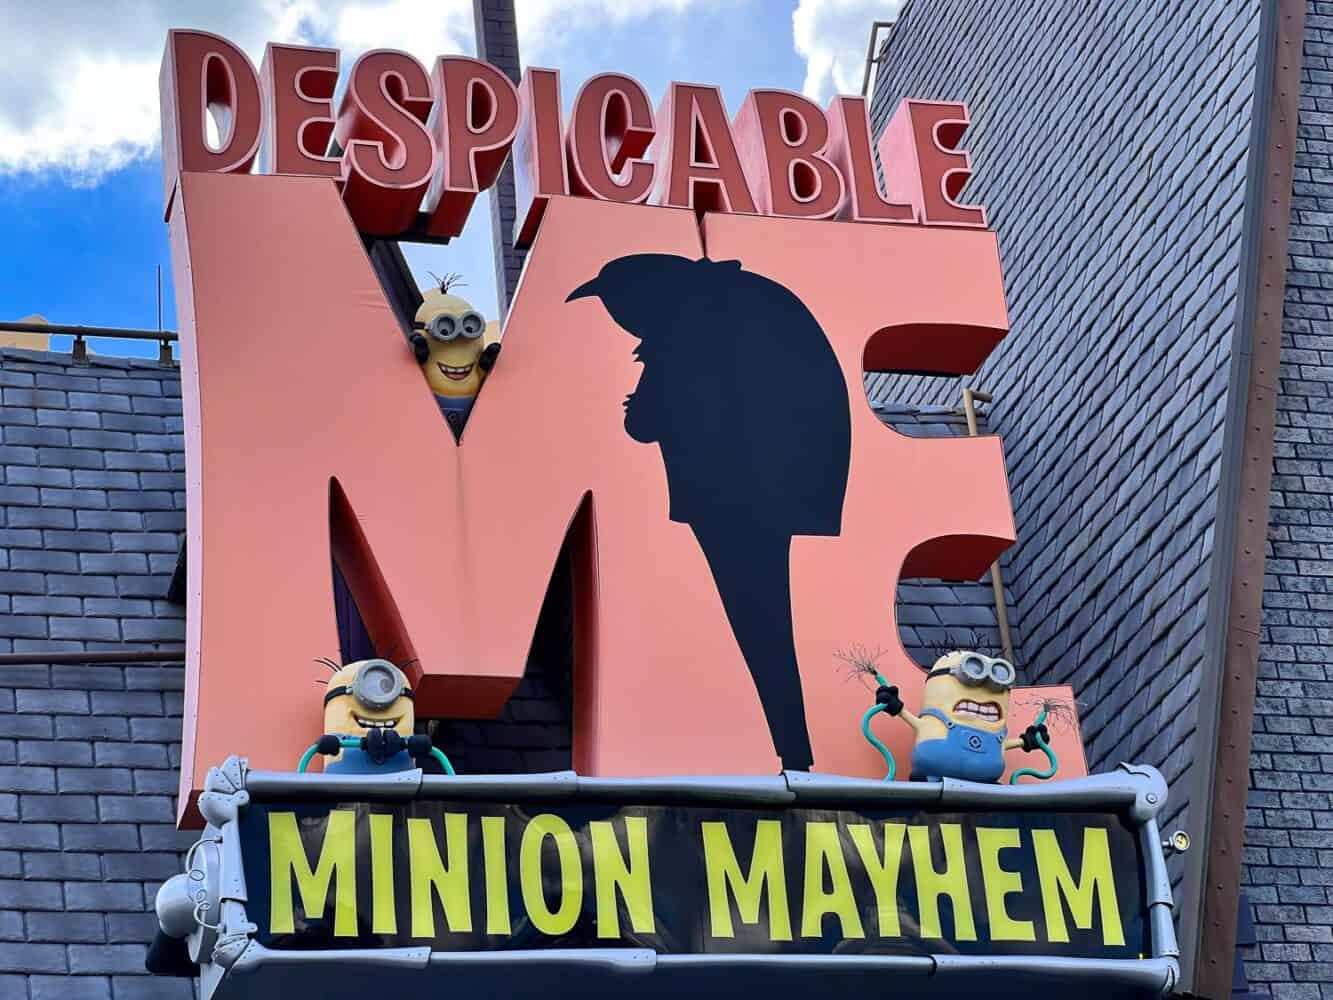 Entrance to Despicable Me Minion Mayhem ride at Universal Orlando, USA